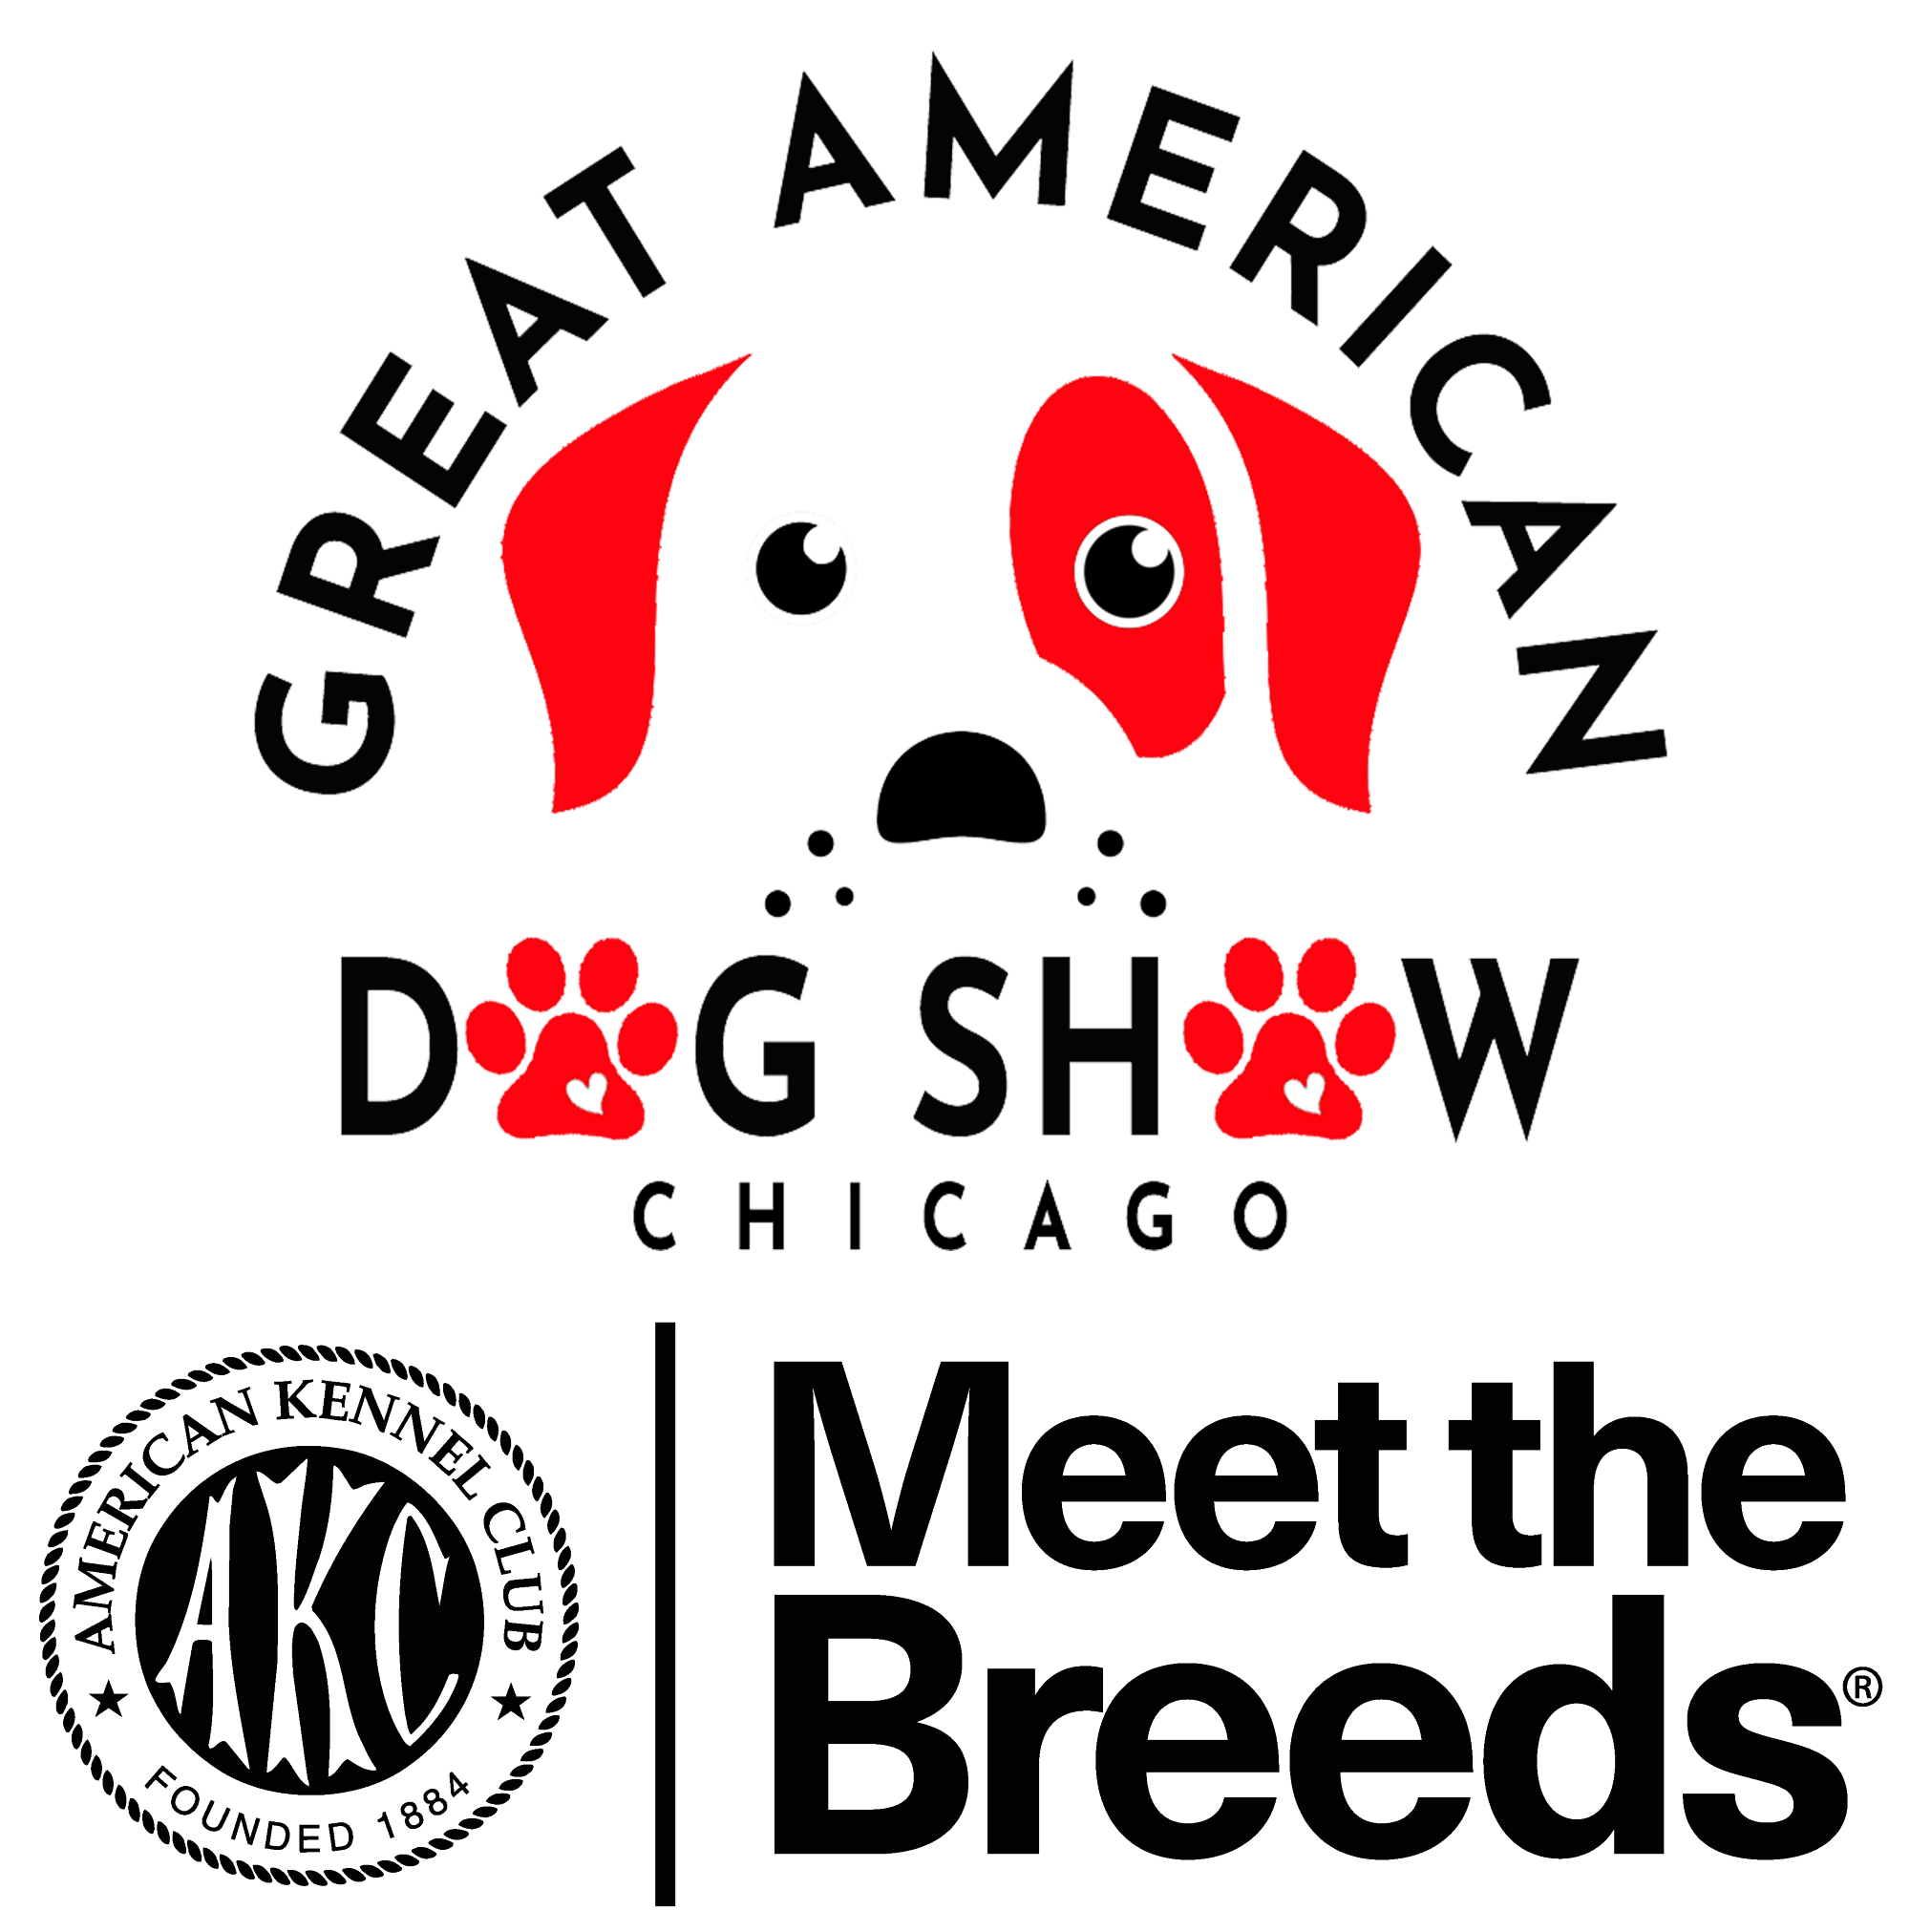 Great American Dog Show logo